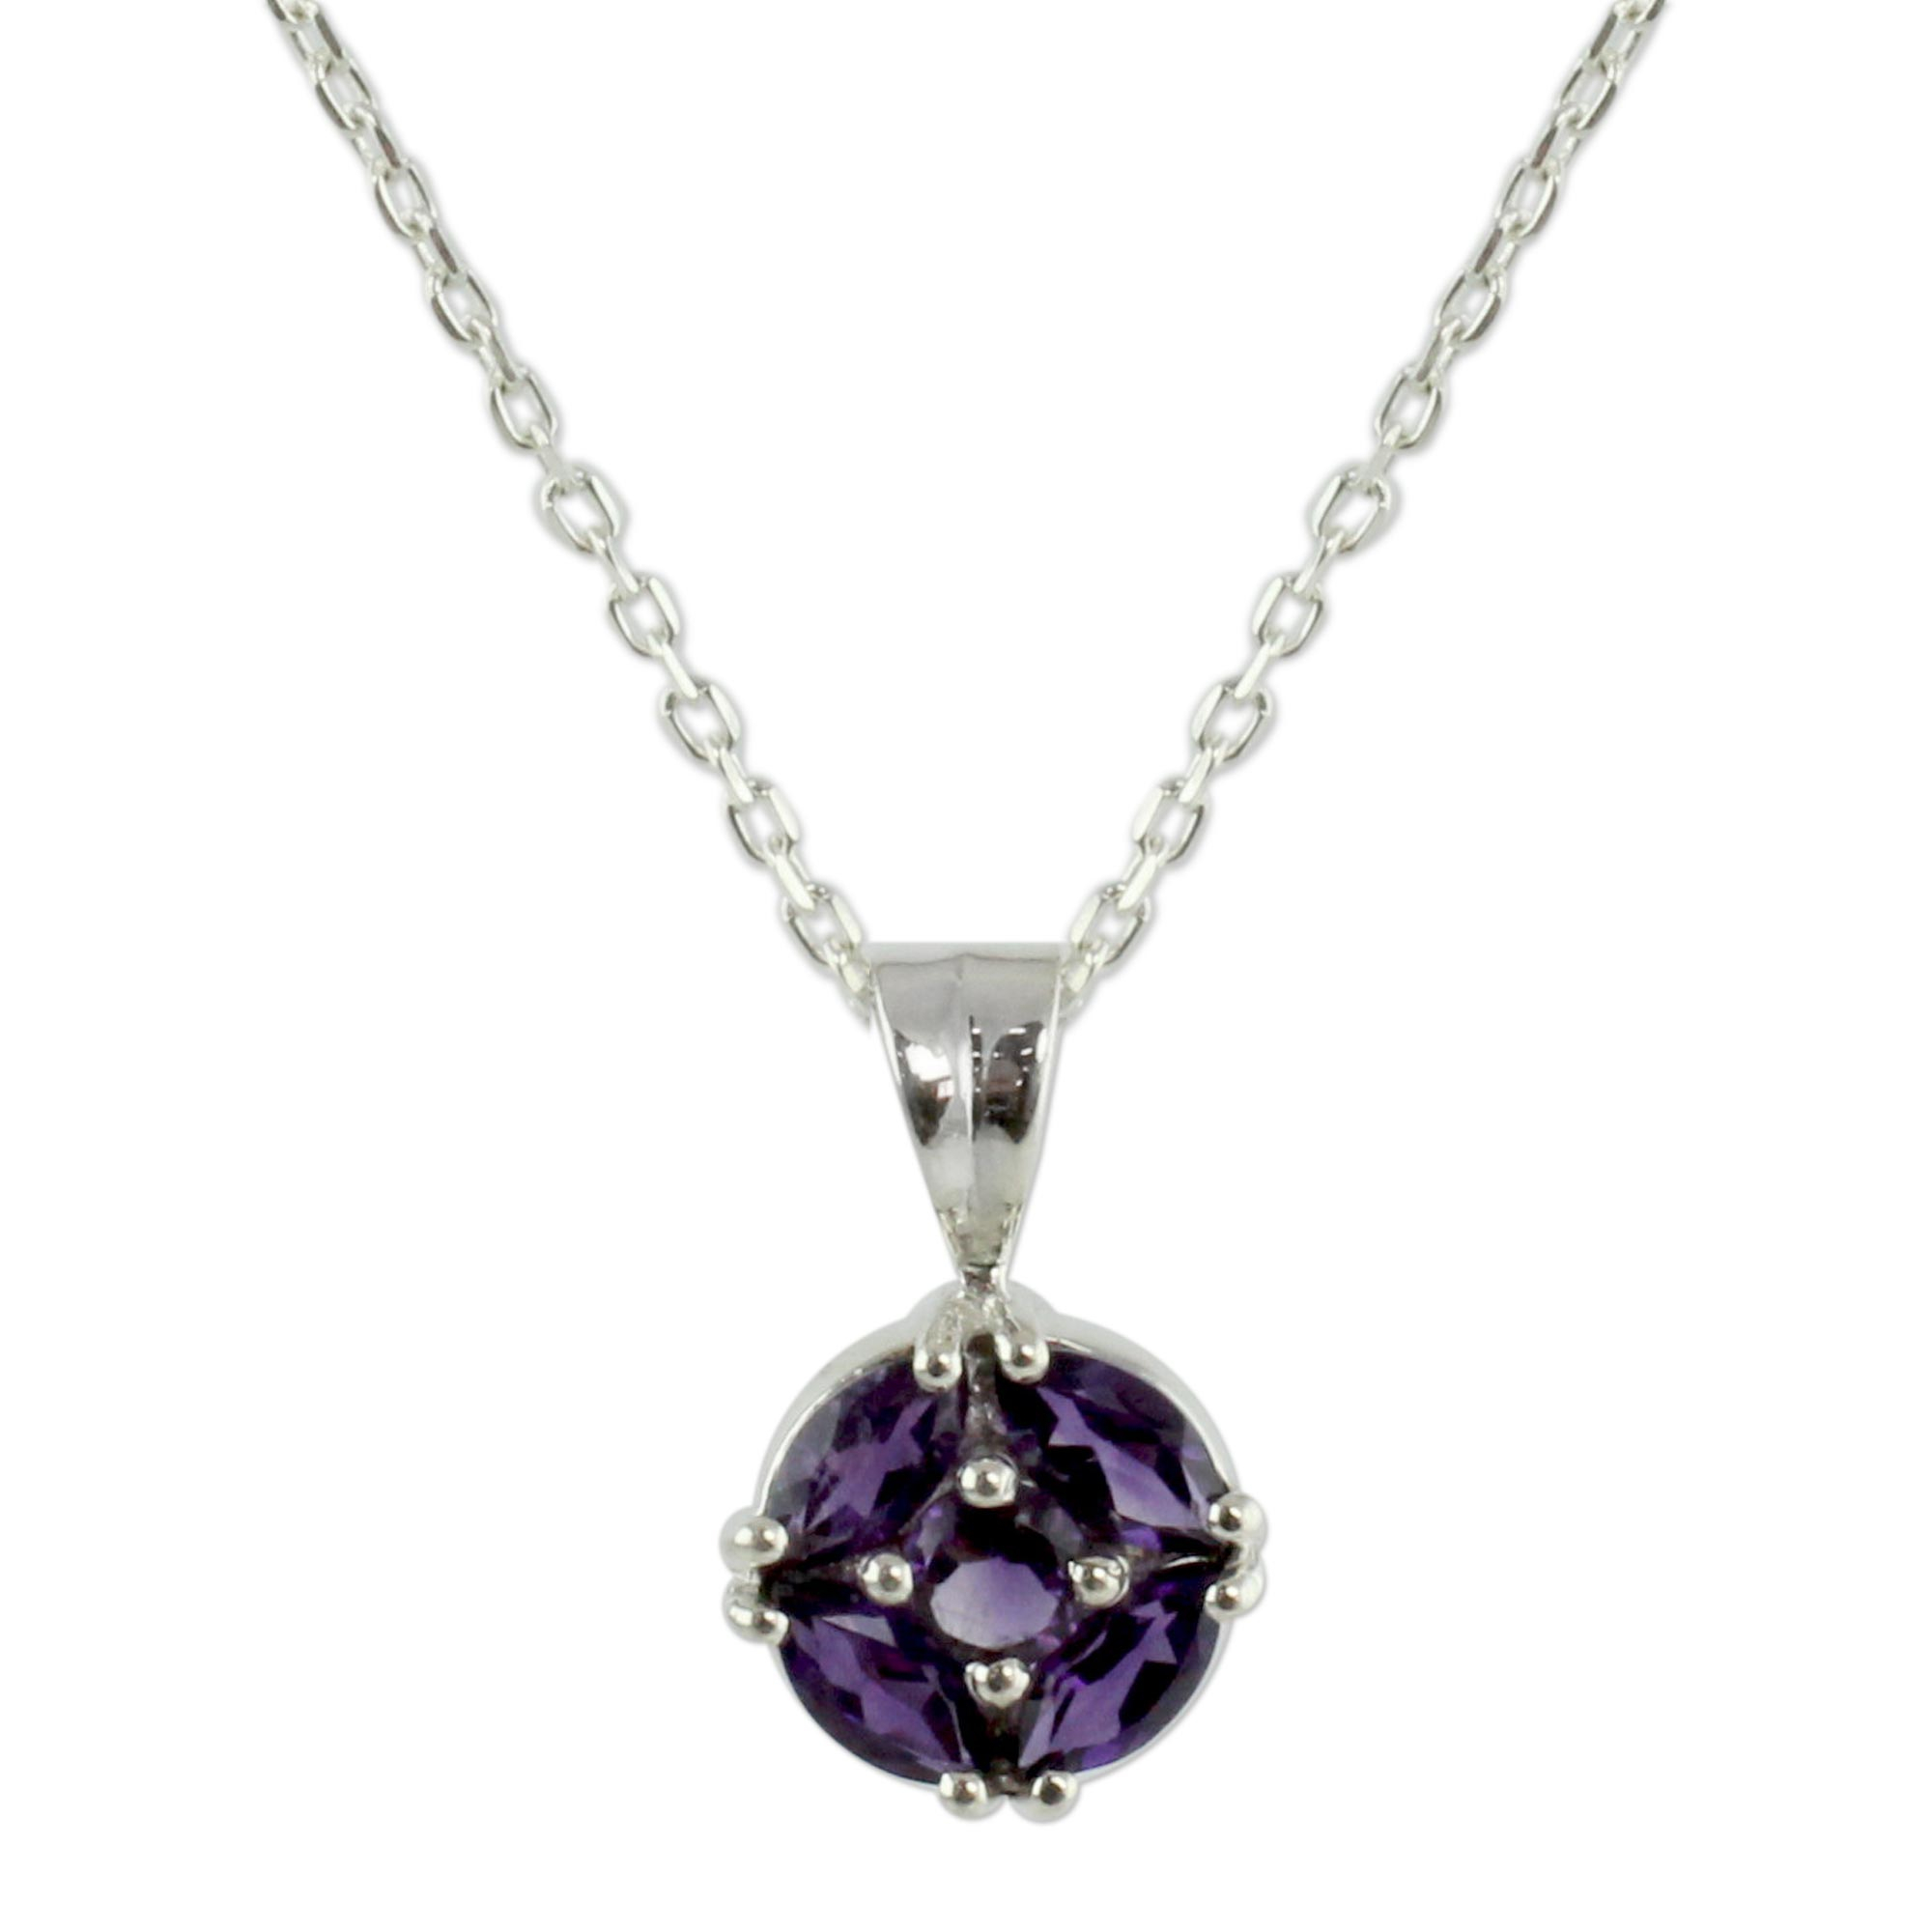 Amethyst pendant necklace - Jaipur Star | NOVICA